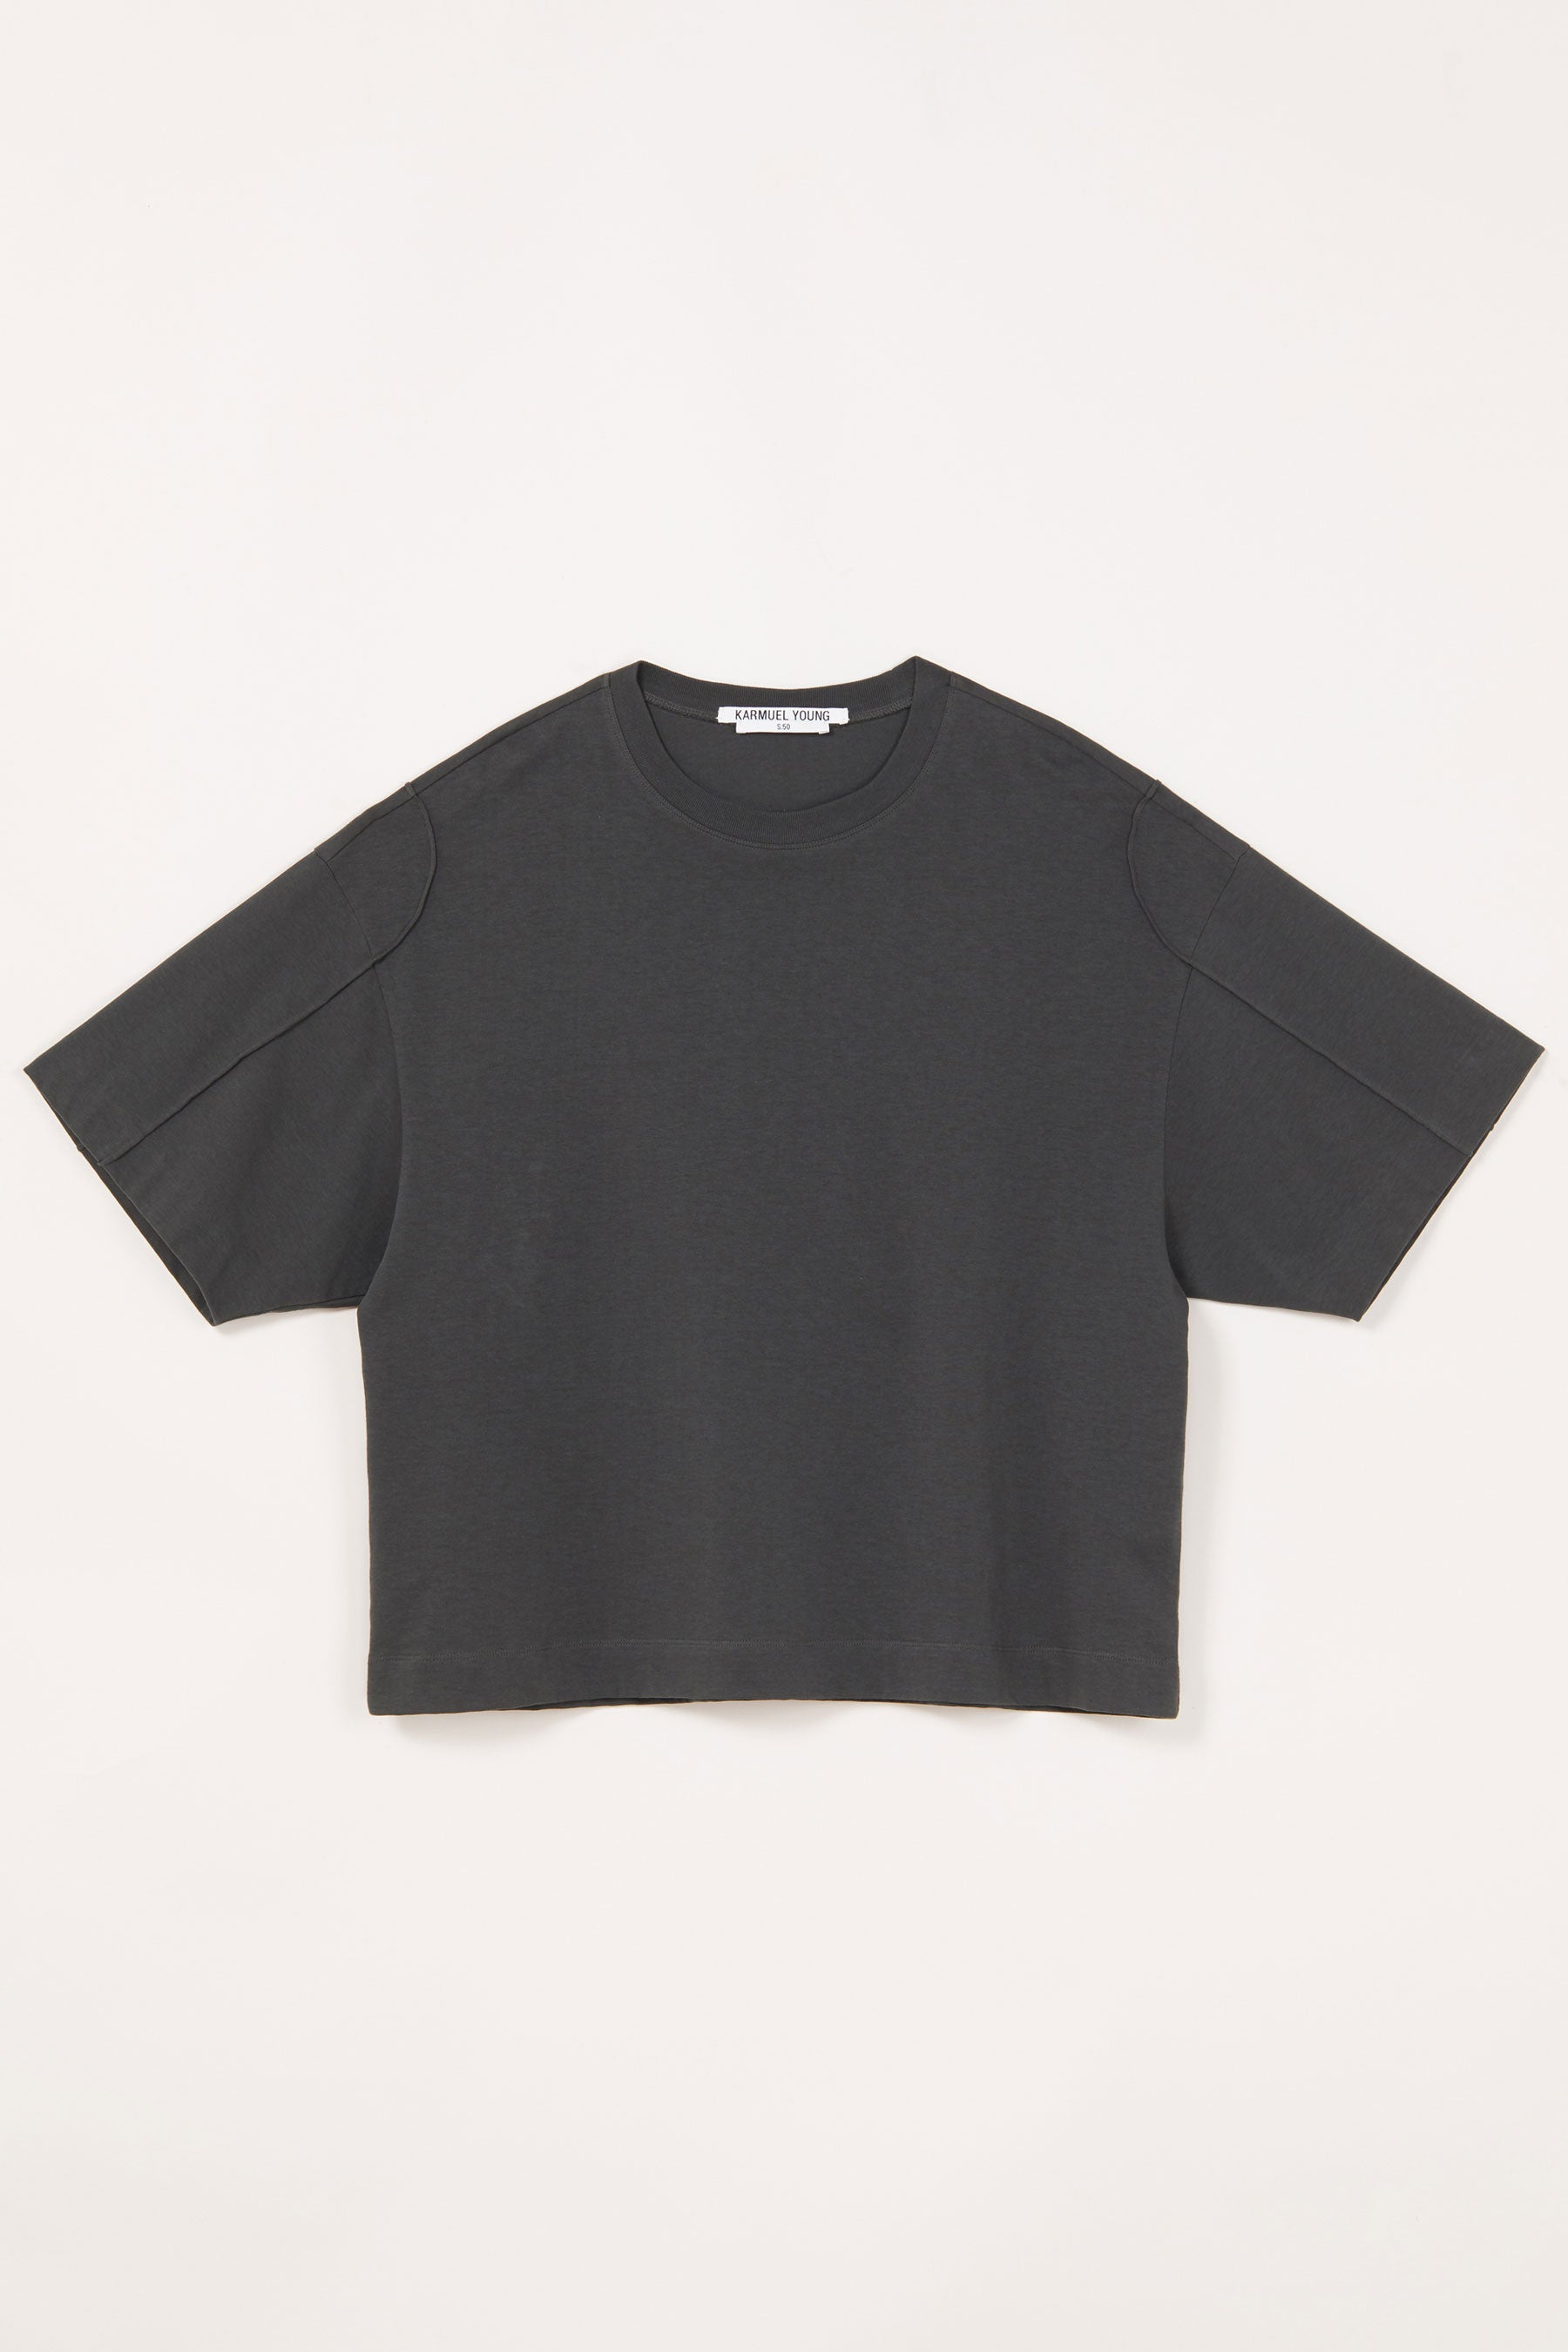 Dark Grey Cotton Square YZ-plane T-Shirt